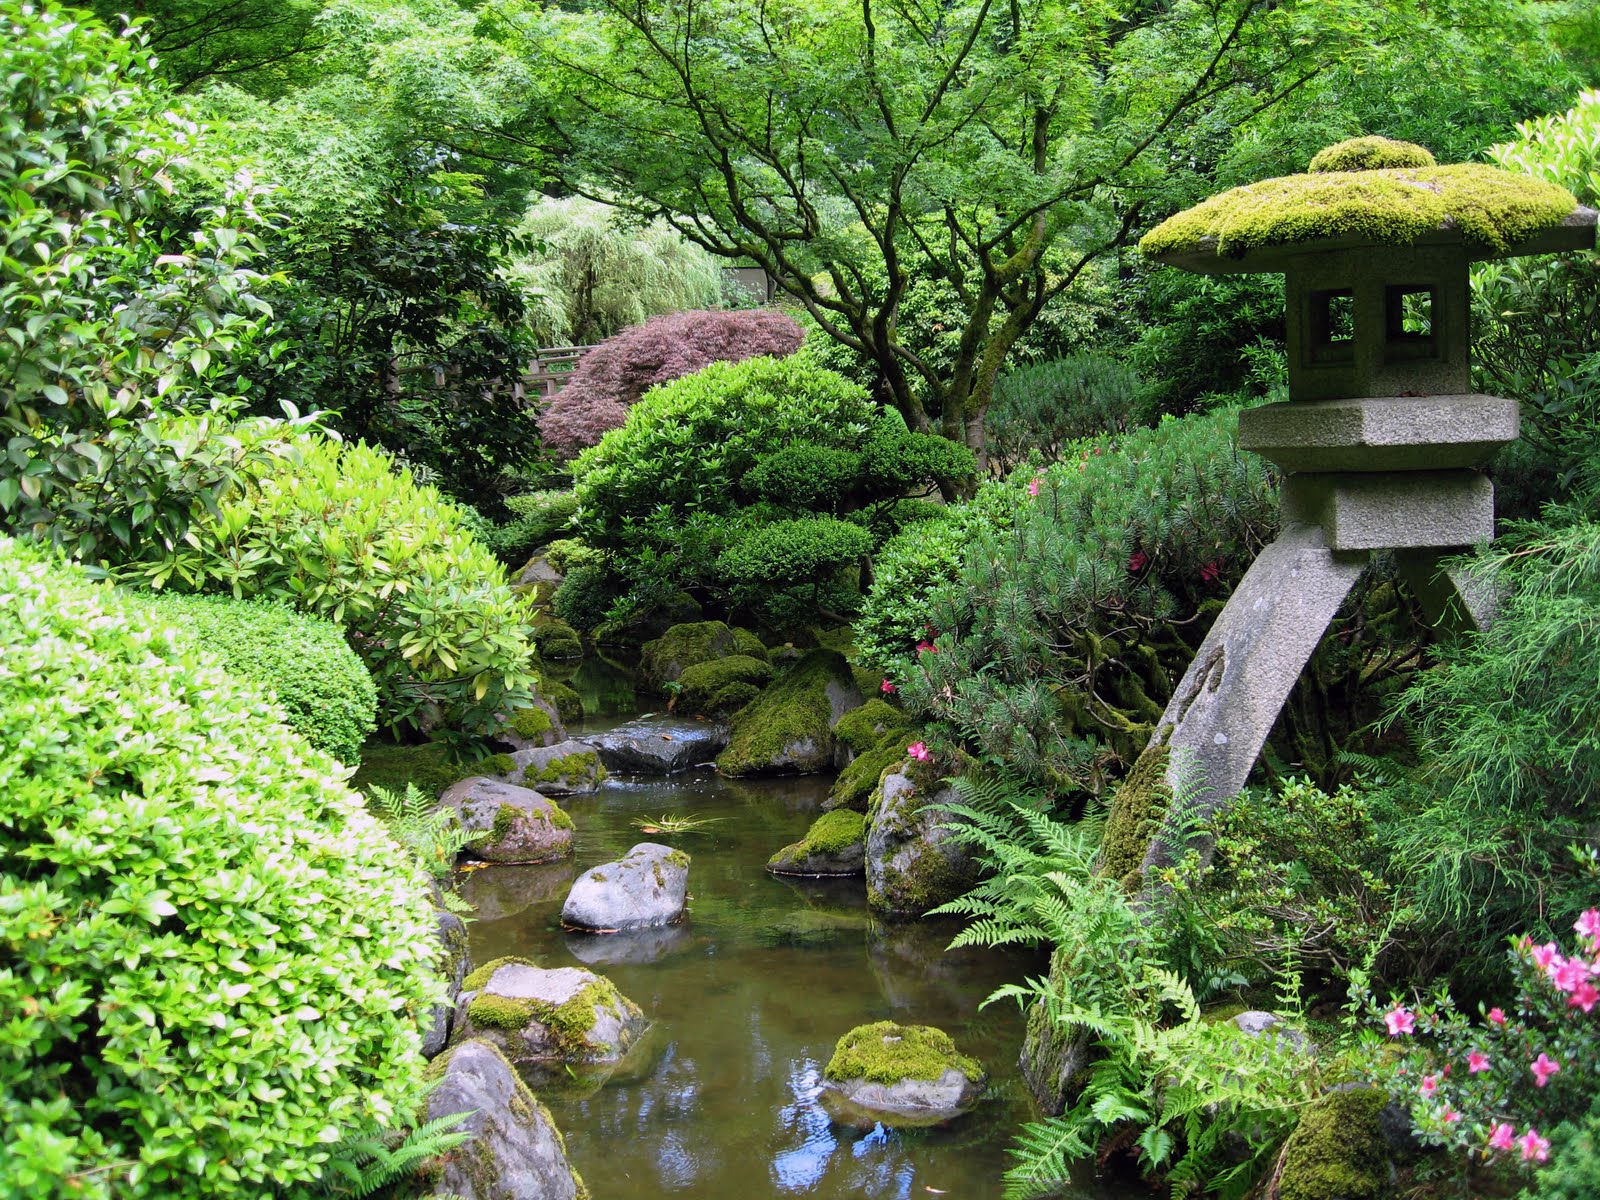 visit the Japanese Gardens